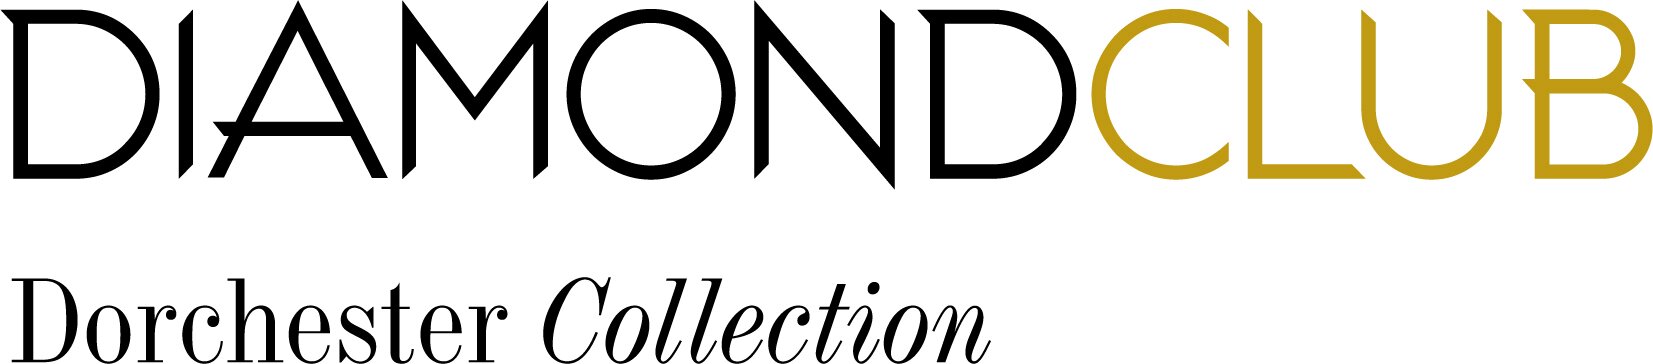 Dorchester Collection_Diamond Club_Logo Left aligned_GOLD_2021.jpg